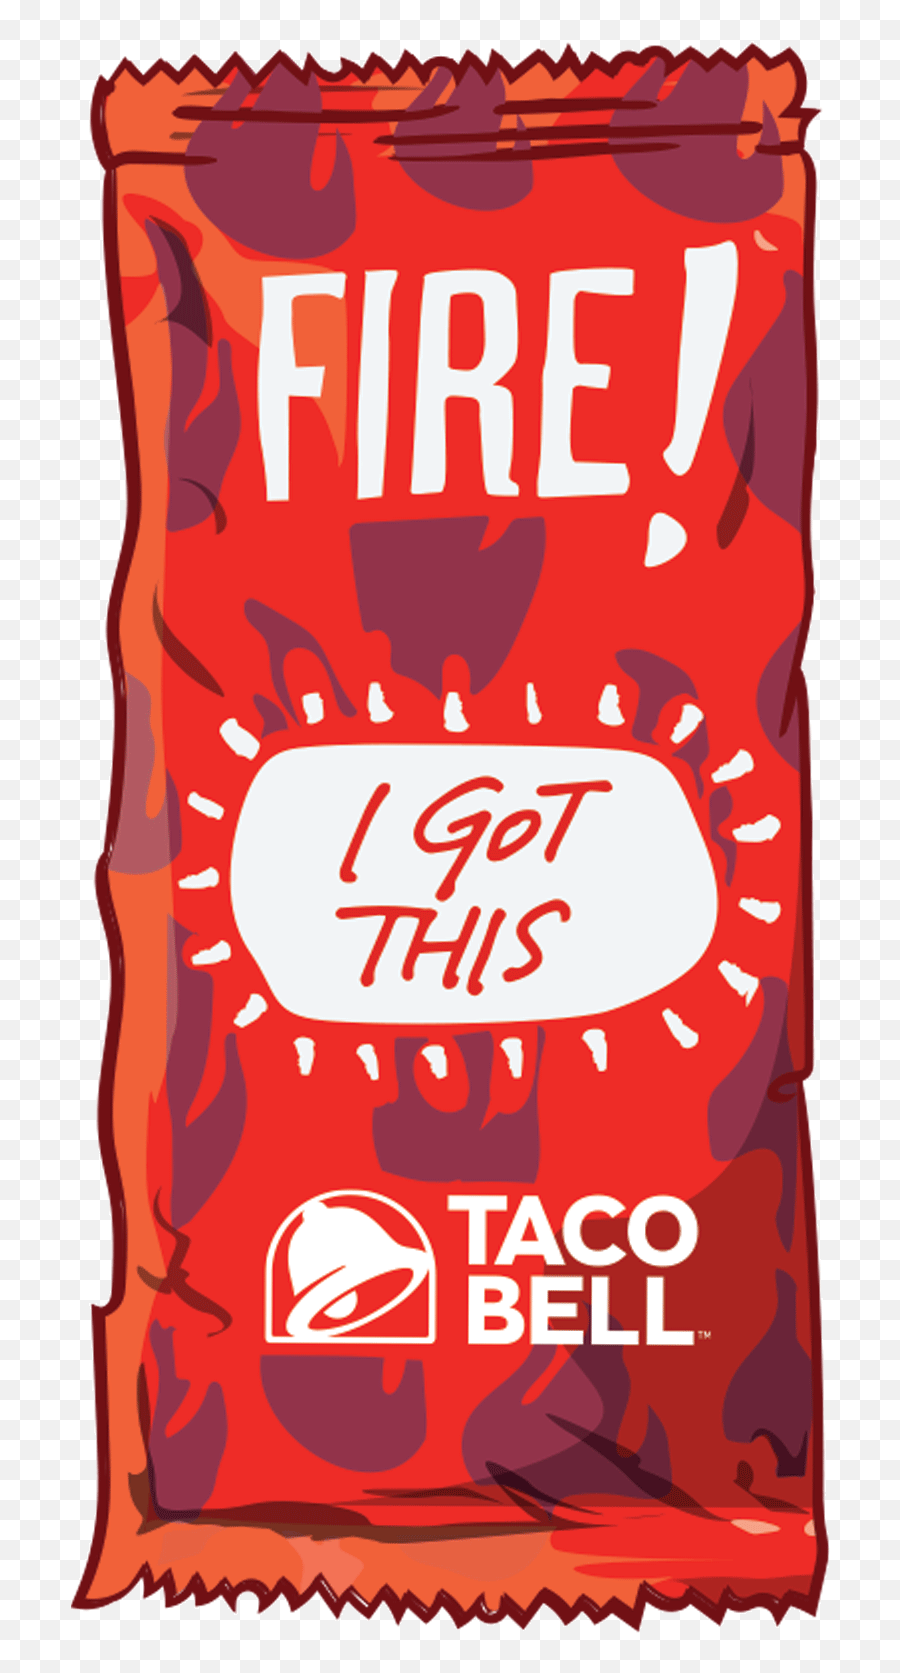 Taco Bell Sauce Clip Art Page 1 - Line17qqcom Taco Bell Sauce Packet Clipart Emoji,Taco Bell Logo